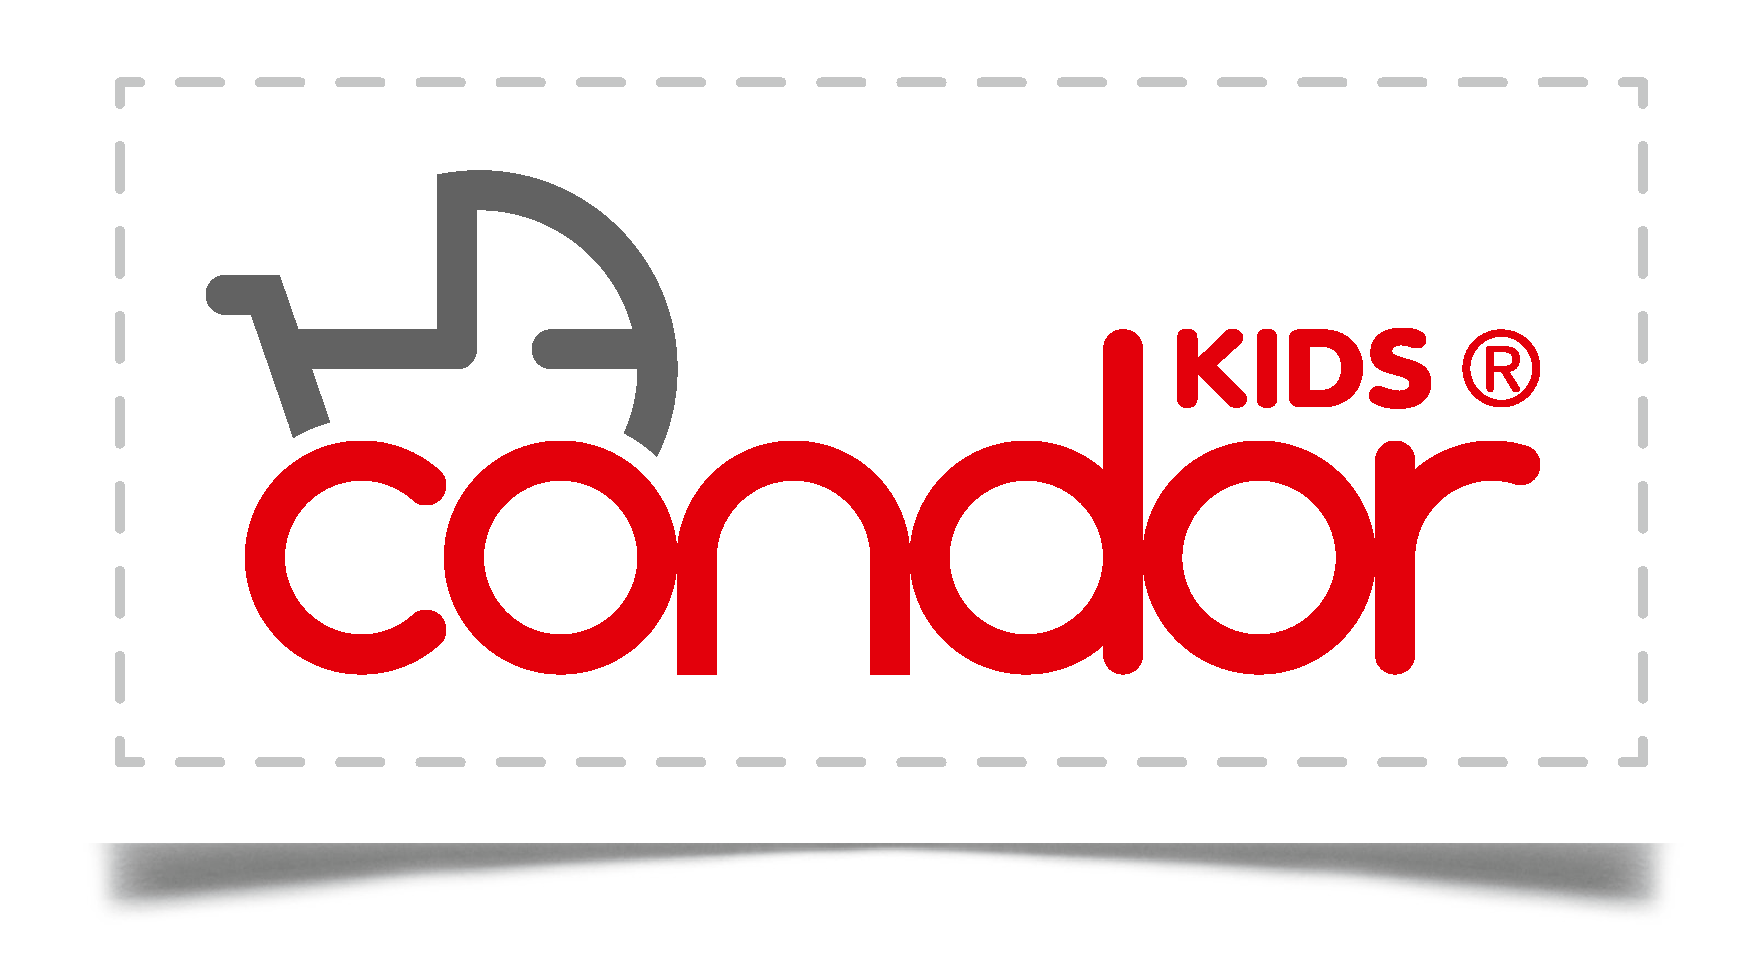 Condor Kids ApSs logo